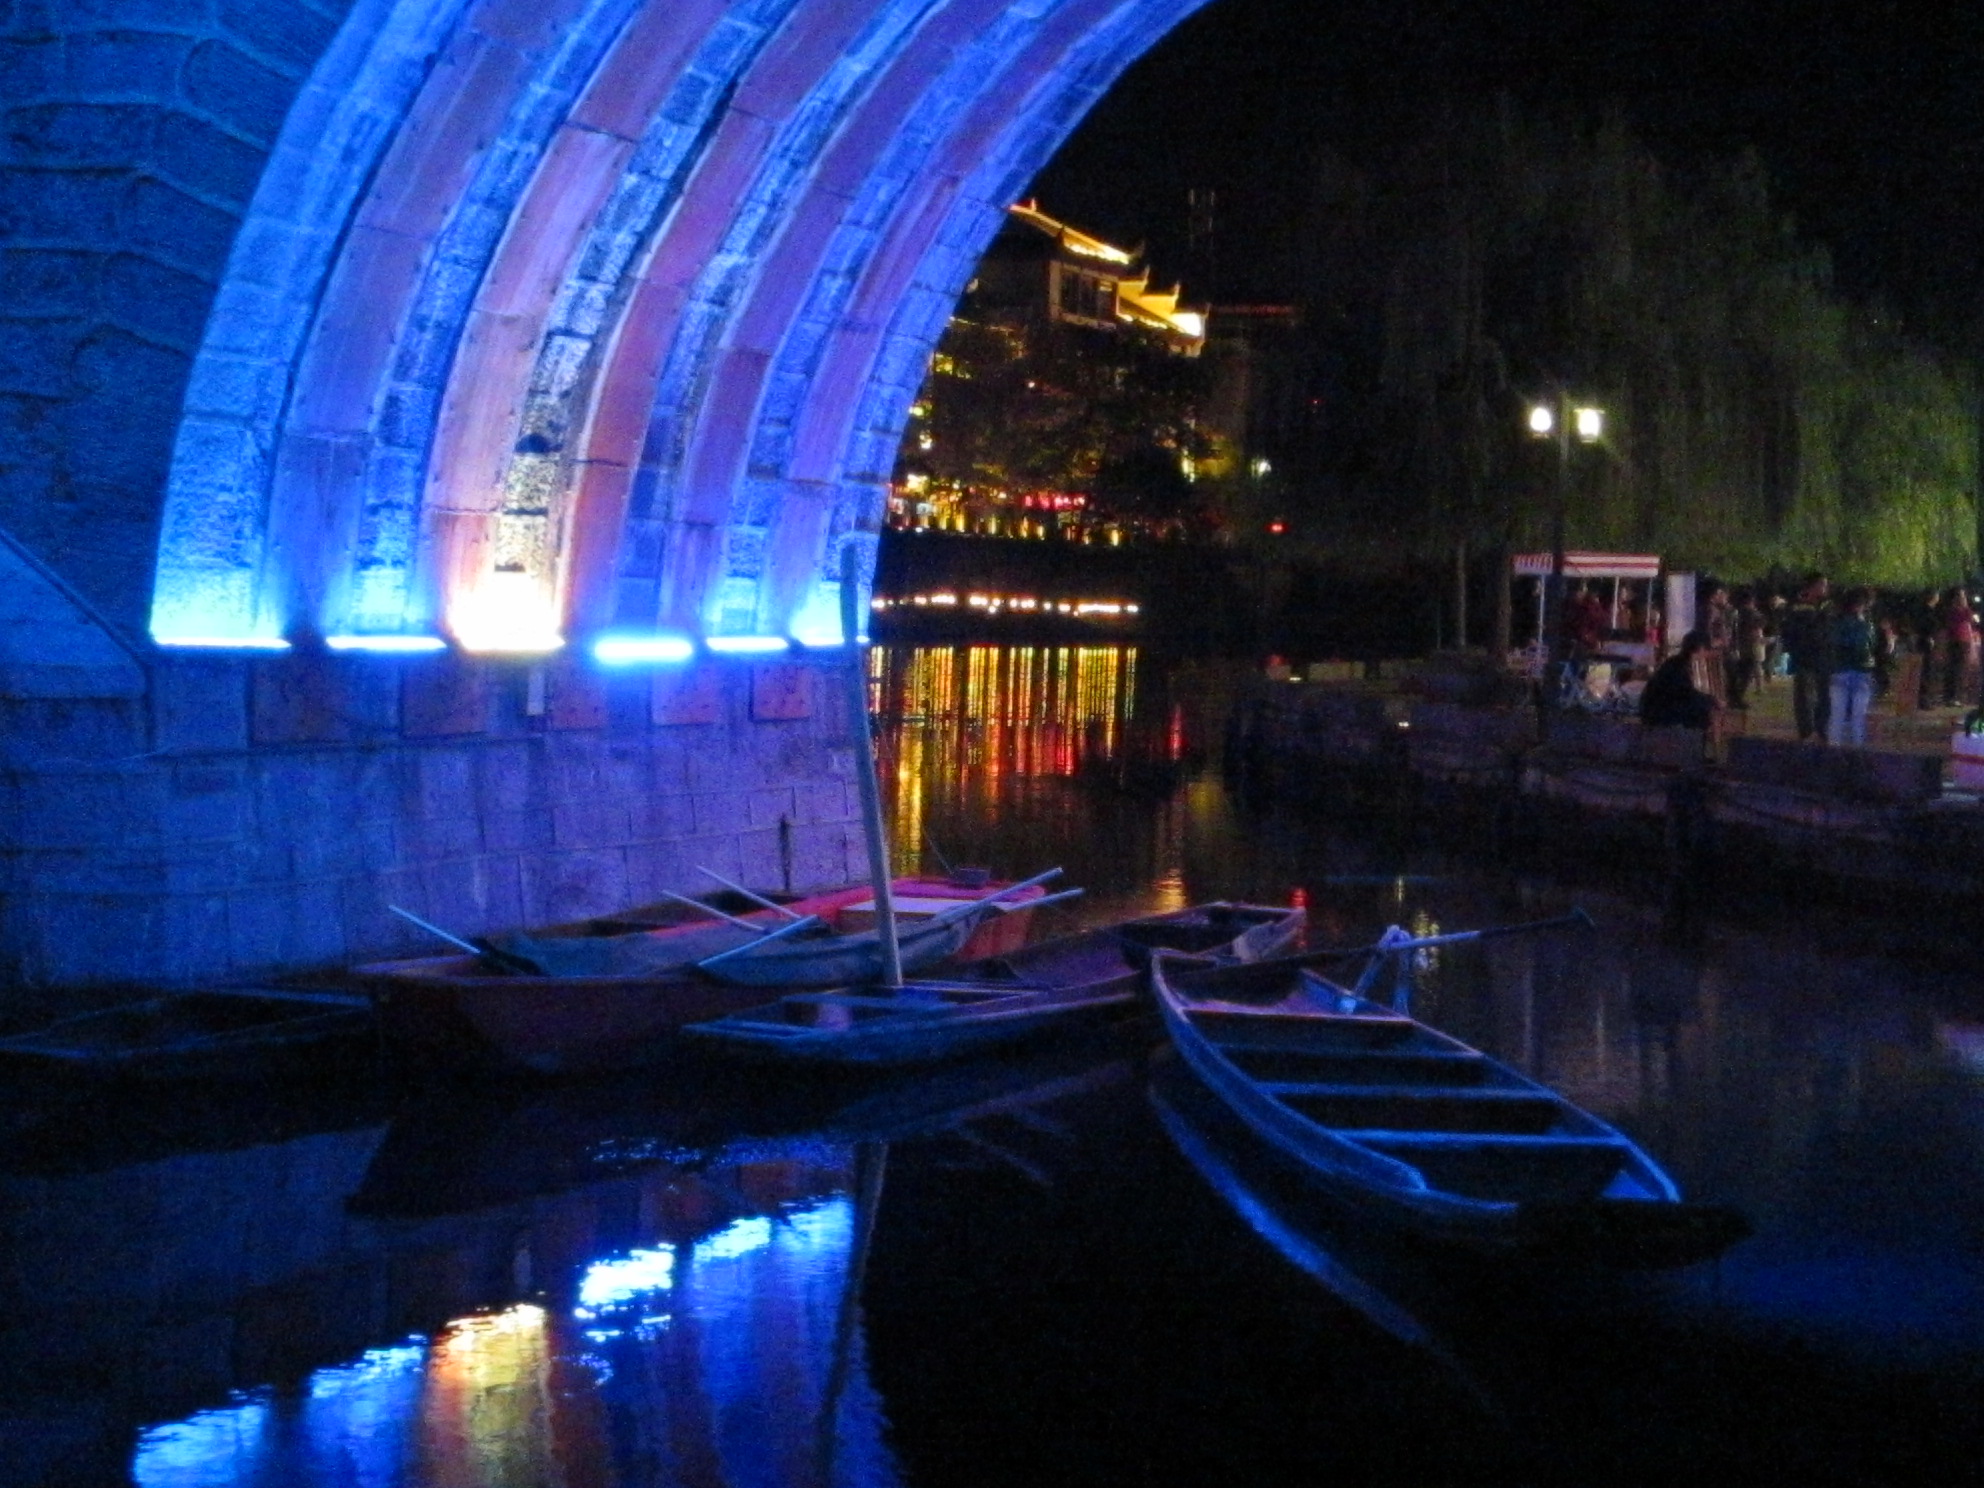 Fishermen's boats under the bridge